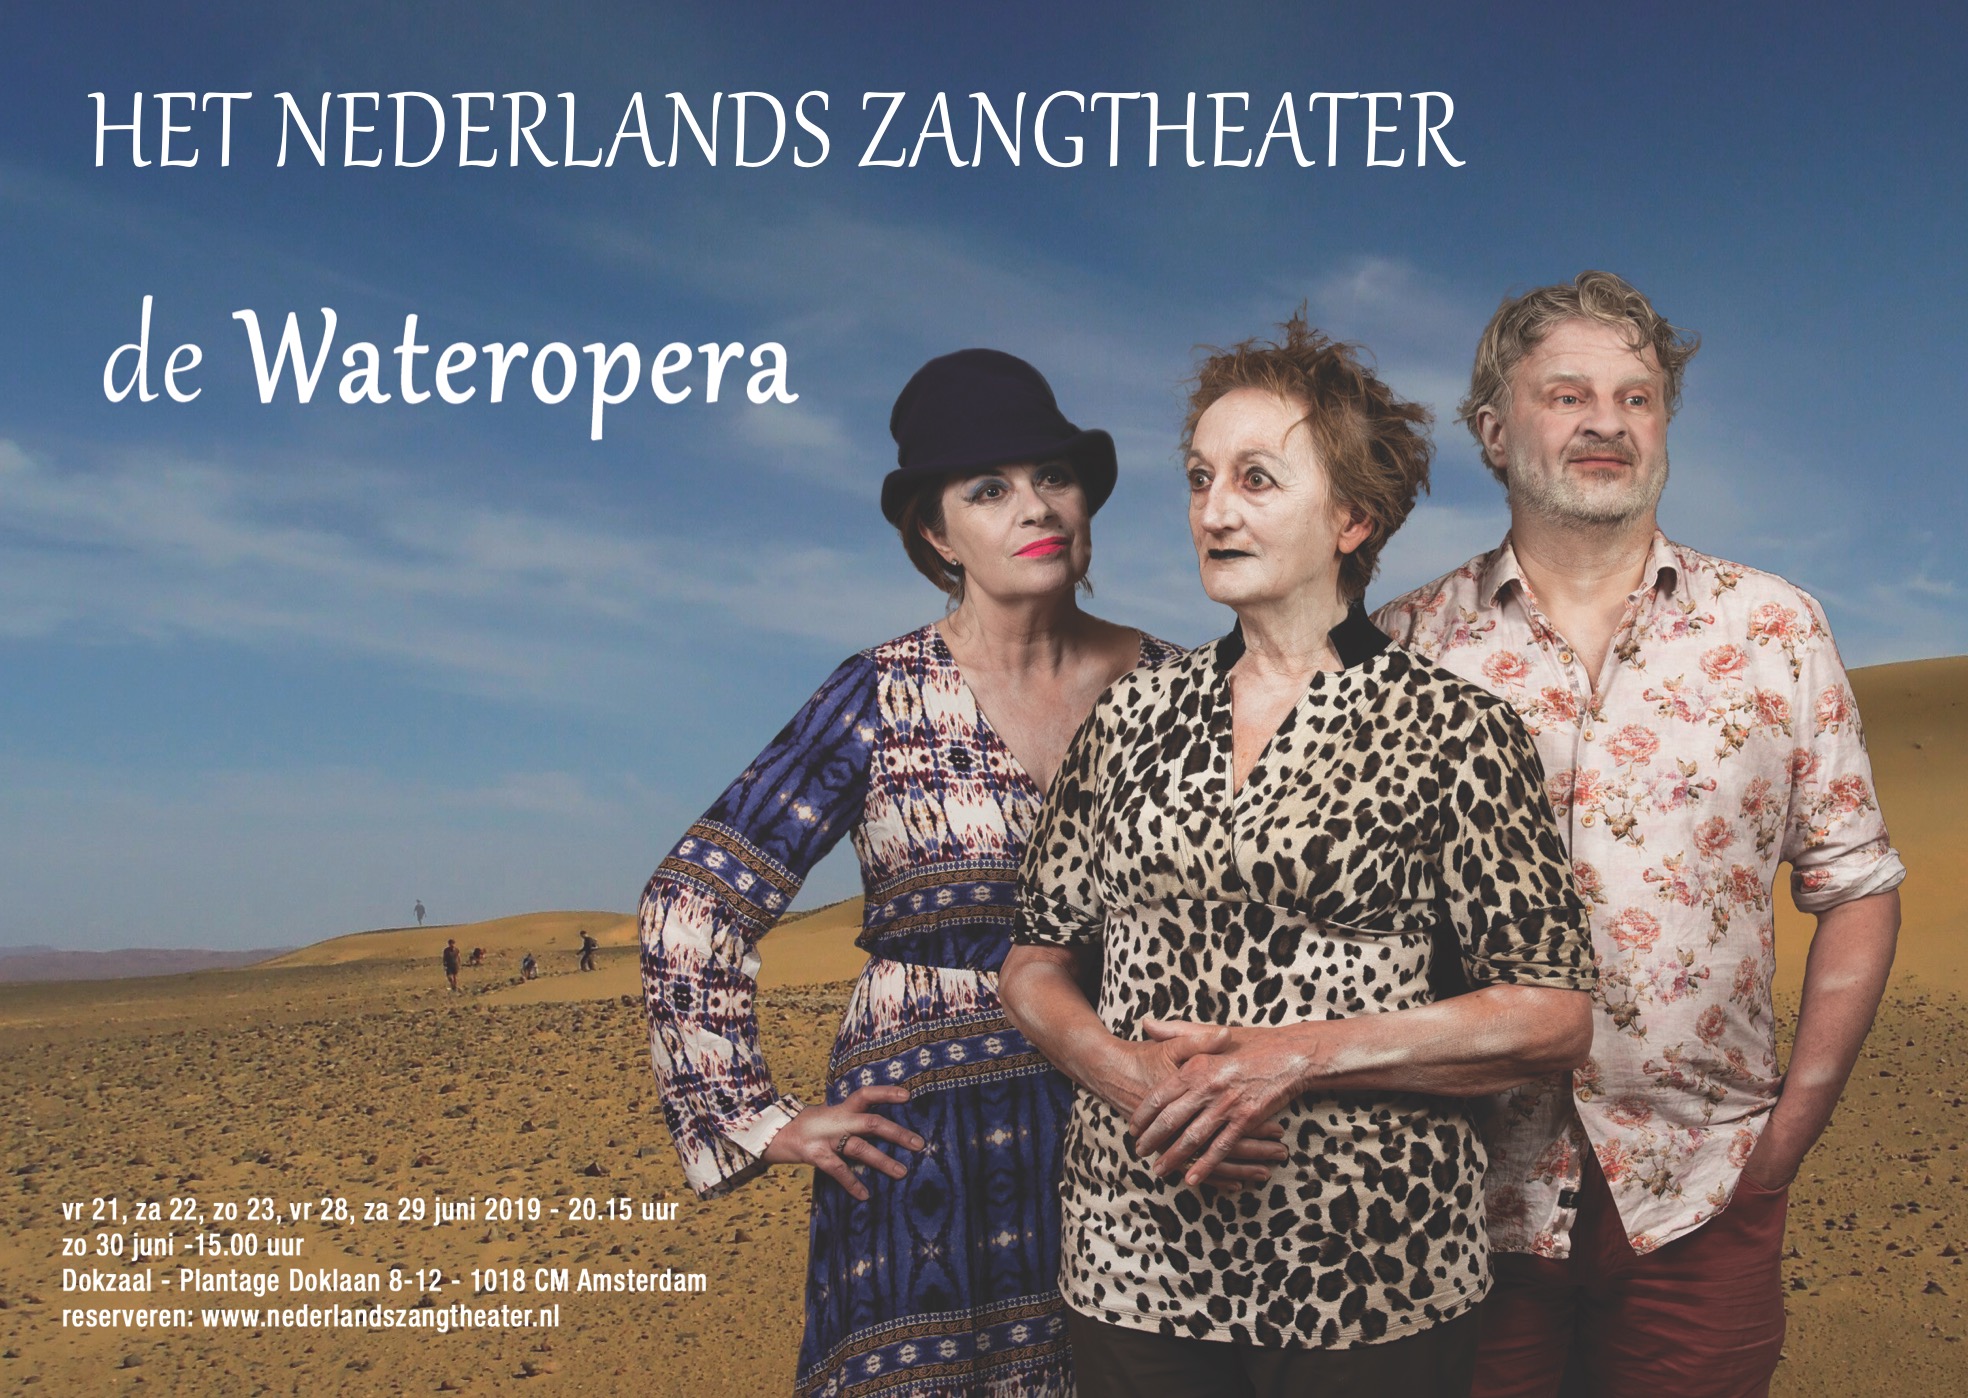 De Wateropera – Nederlands Zangtheater in de Dokzaal